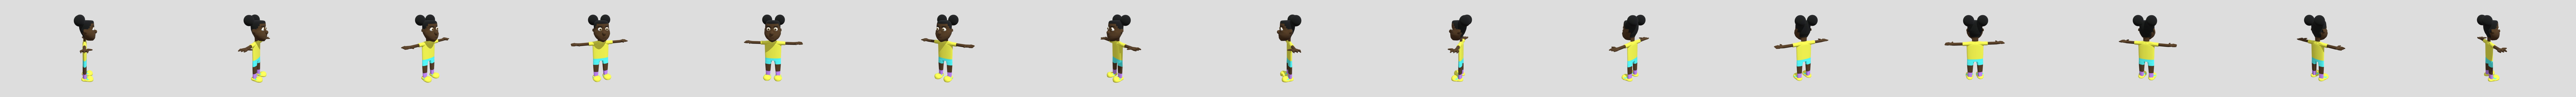 Amanda The Adventurer - Download Free 3D model by Ash0329203 (@Ash0329203)  [e99f00c]